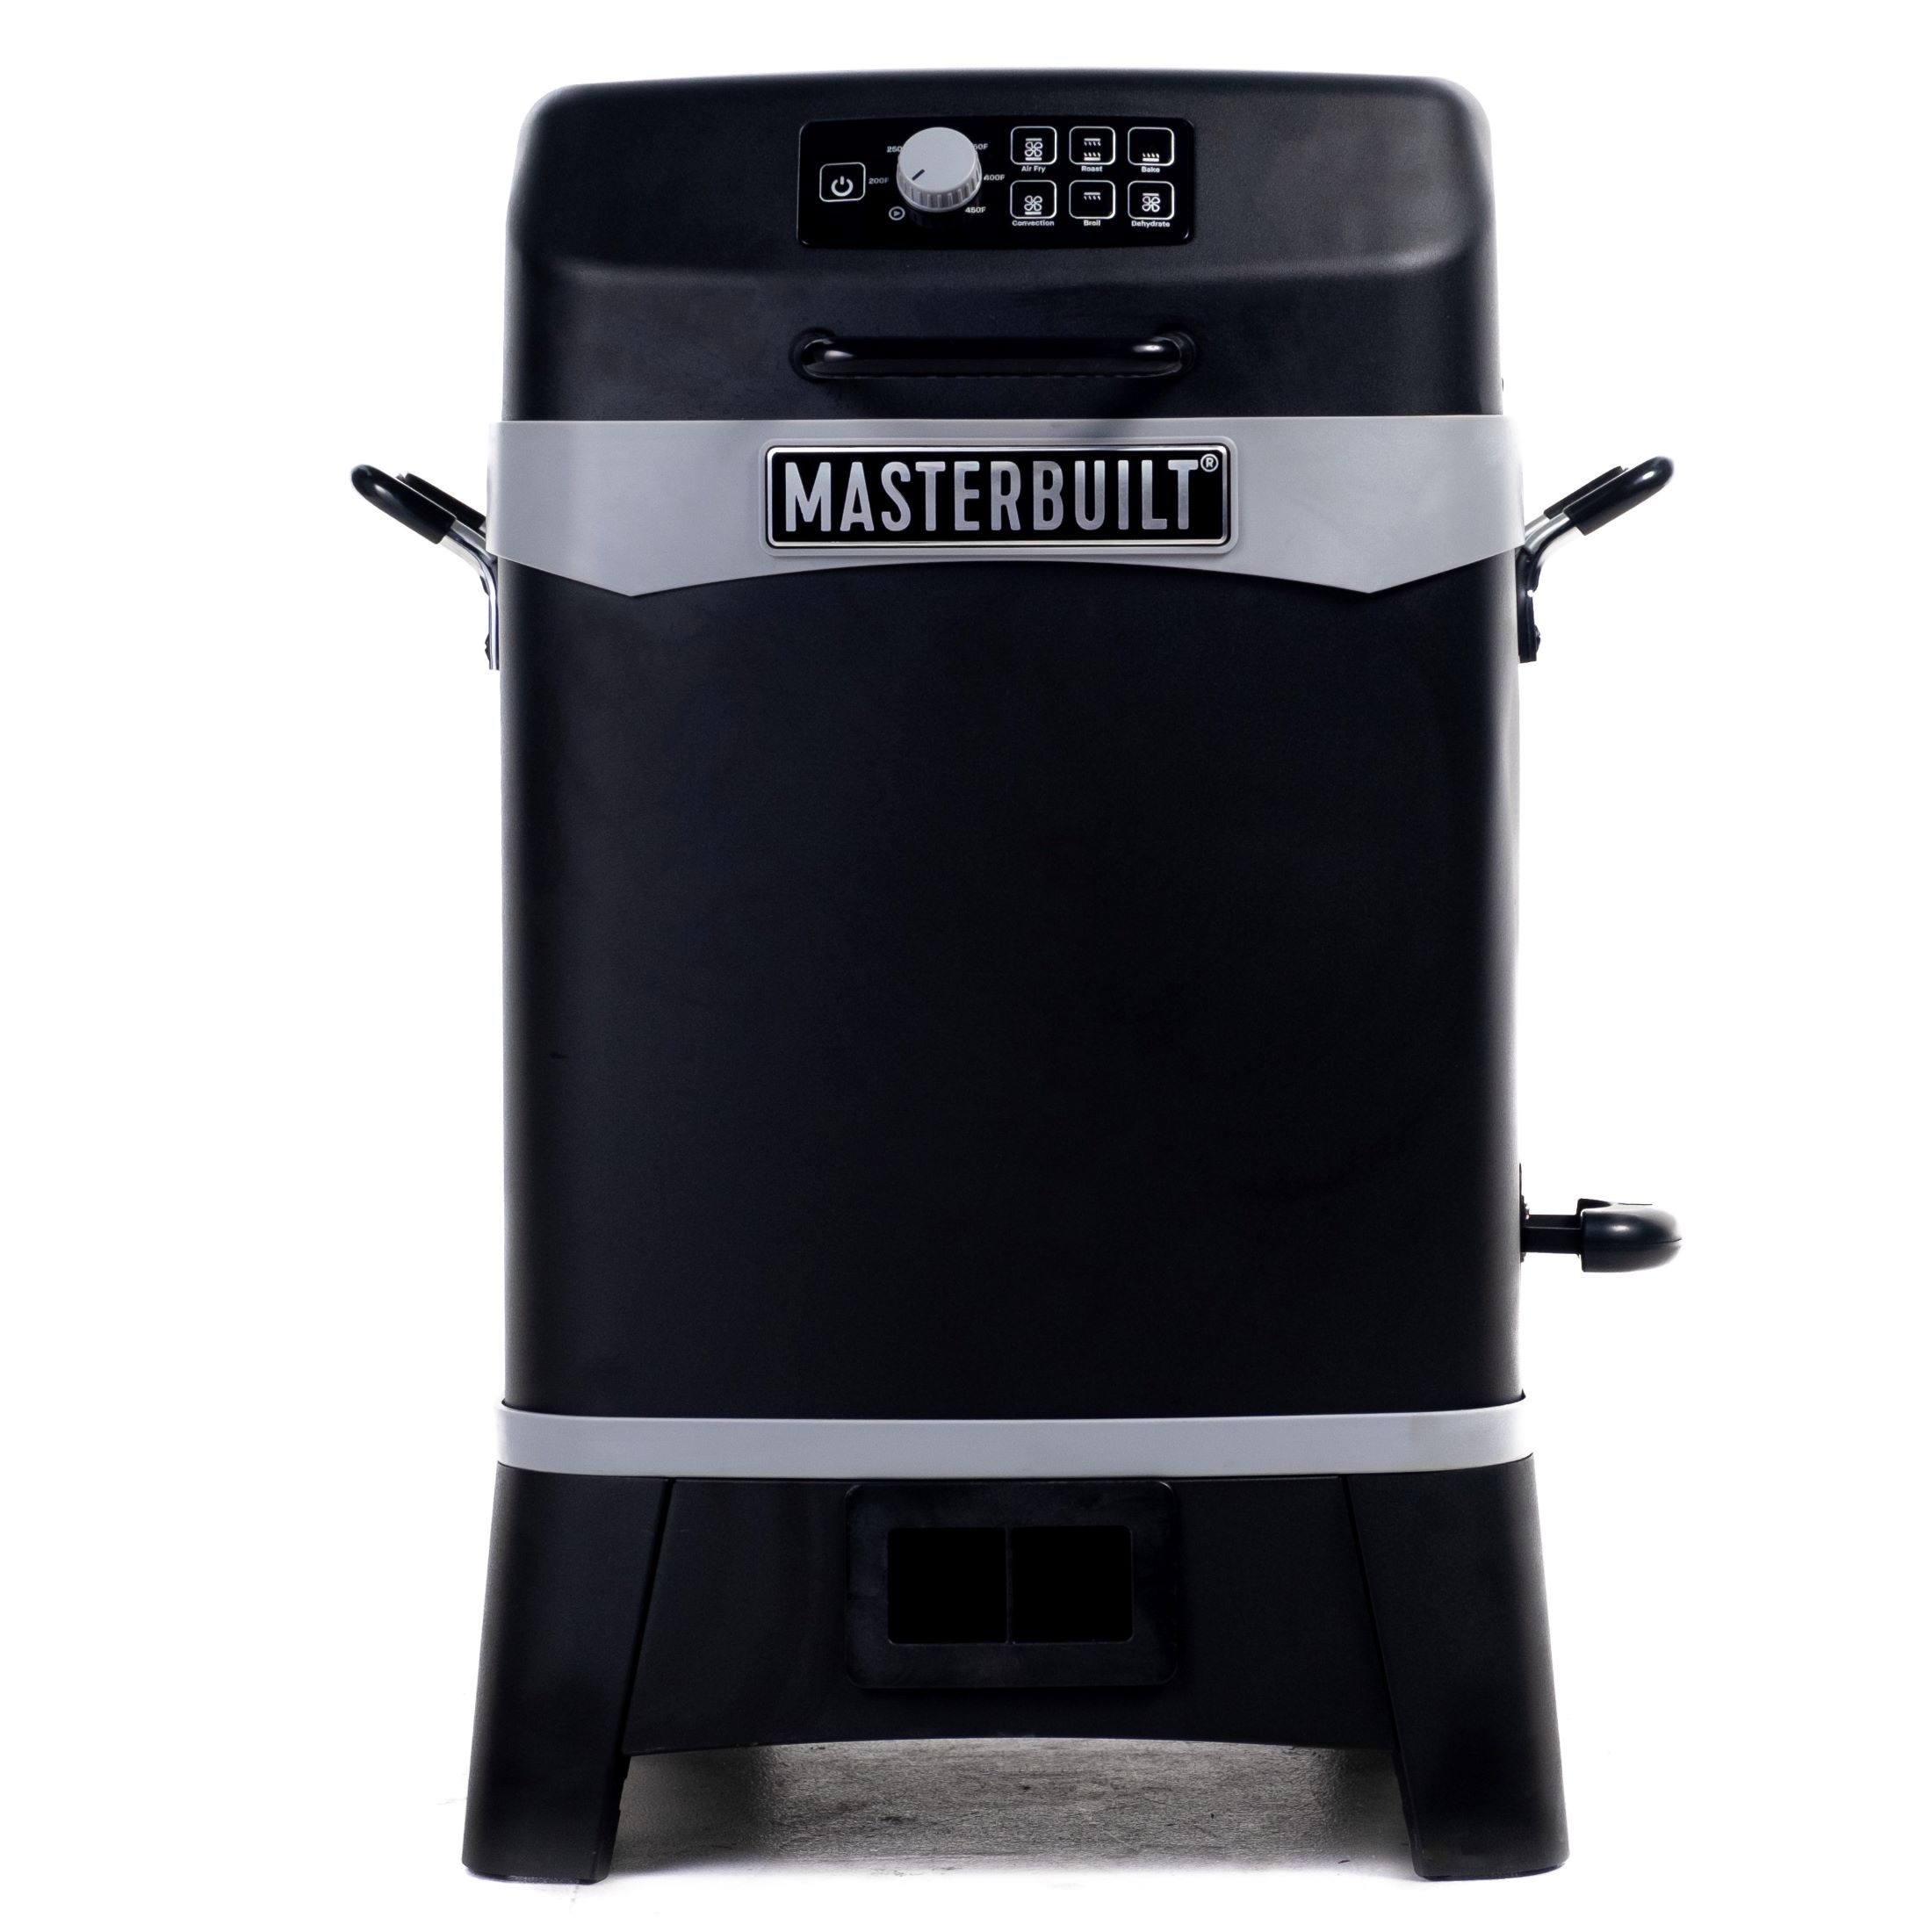 Masterbuilt 20 Quart 6-in-1 Outdoor Air Fryer - image 1 of 13